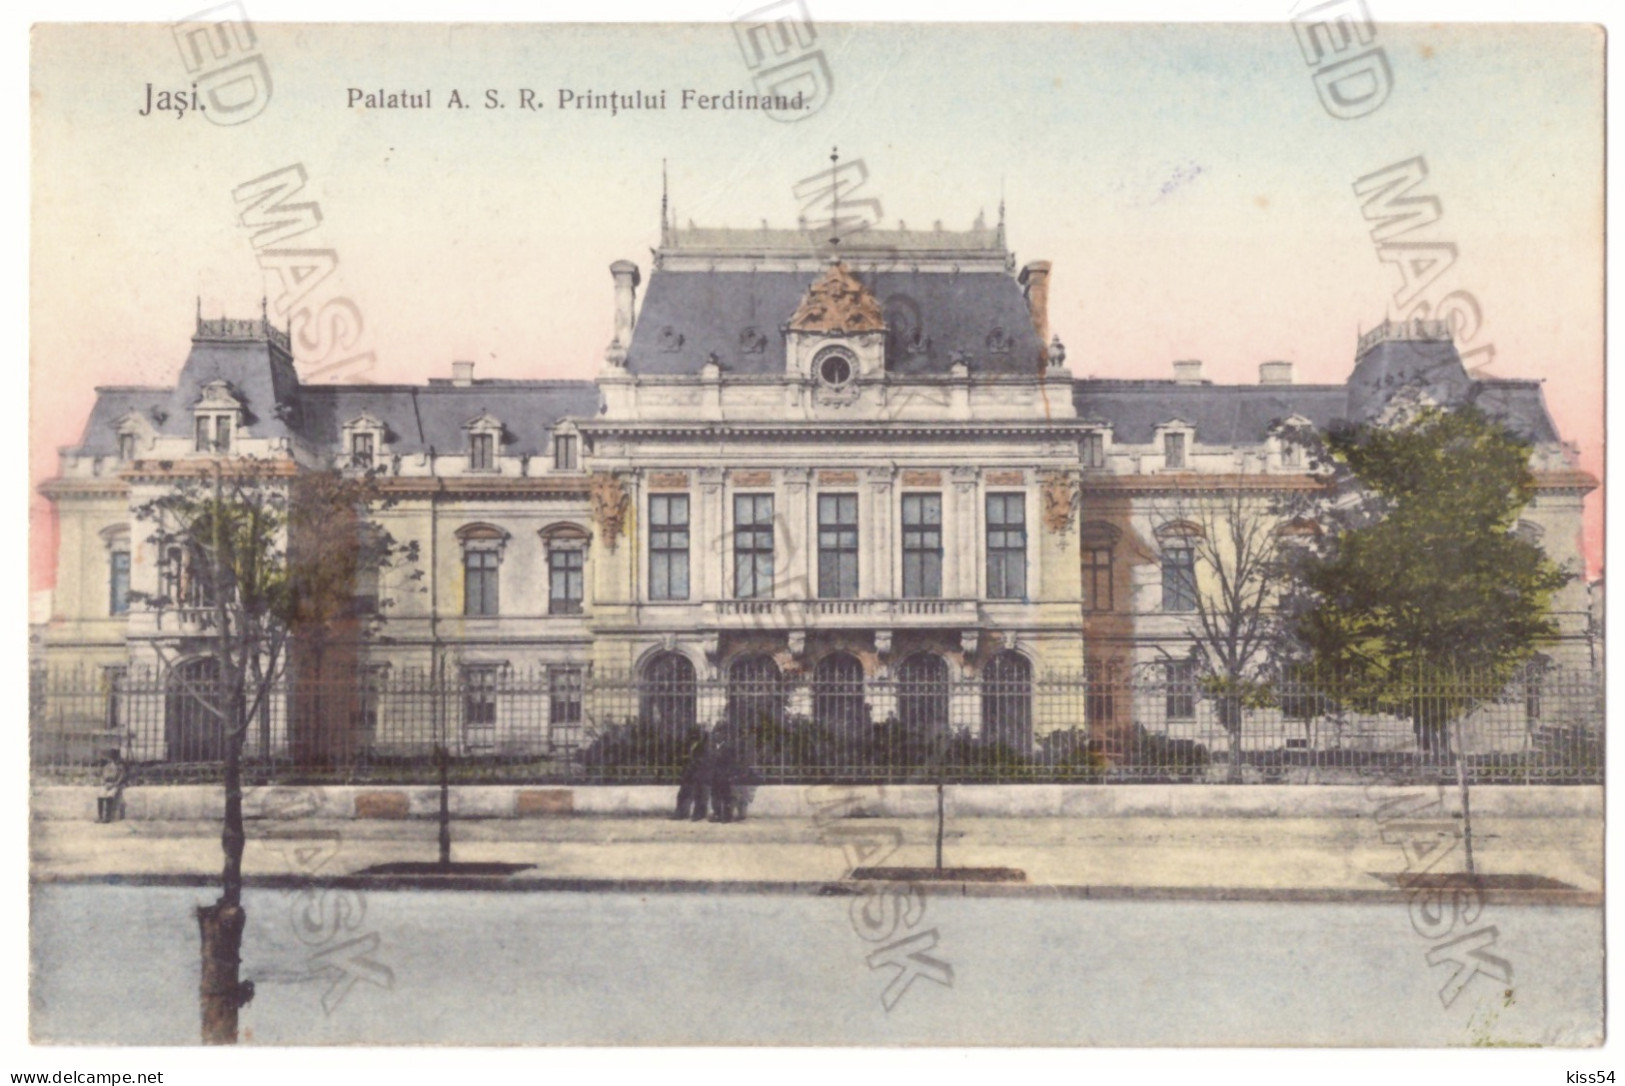 RO 36 - 21529 IASI, Palatul Ferdinand, Romania - Old Postcard - Used - 1908 - Romania